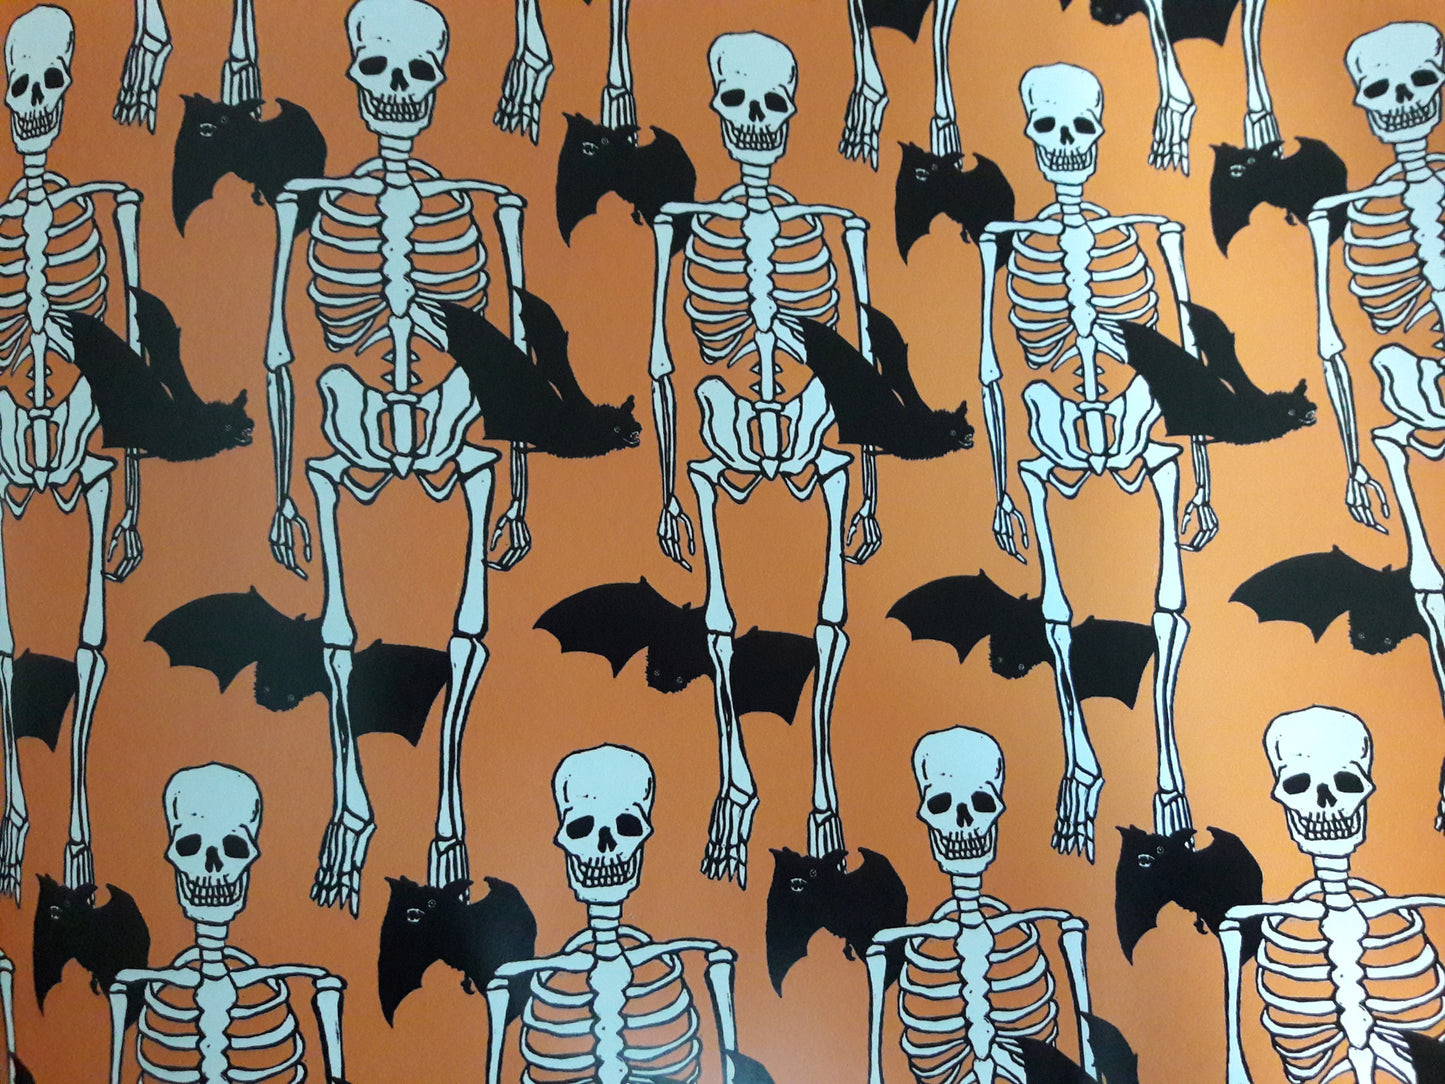 Skeleton and Bat Orange Fabric and Wallpaper